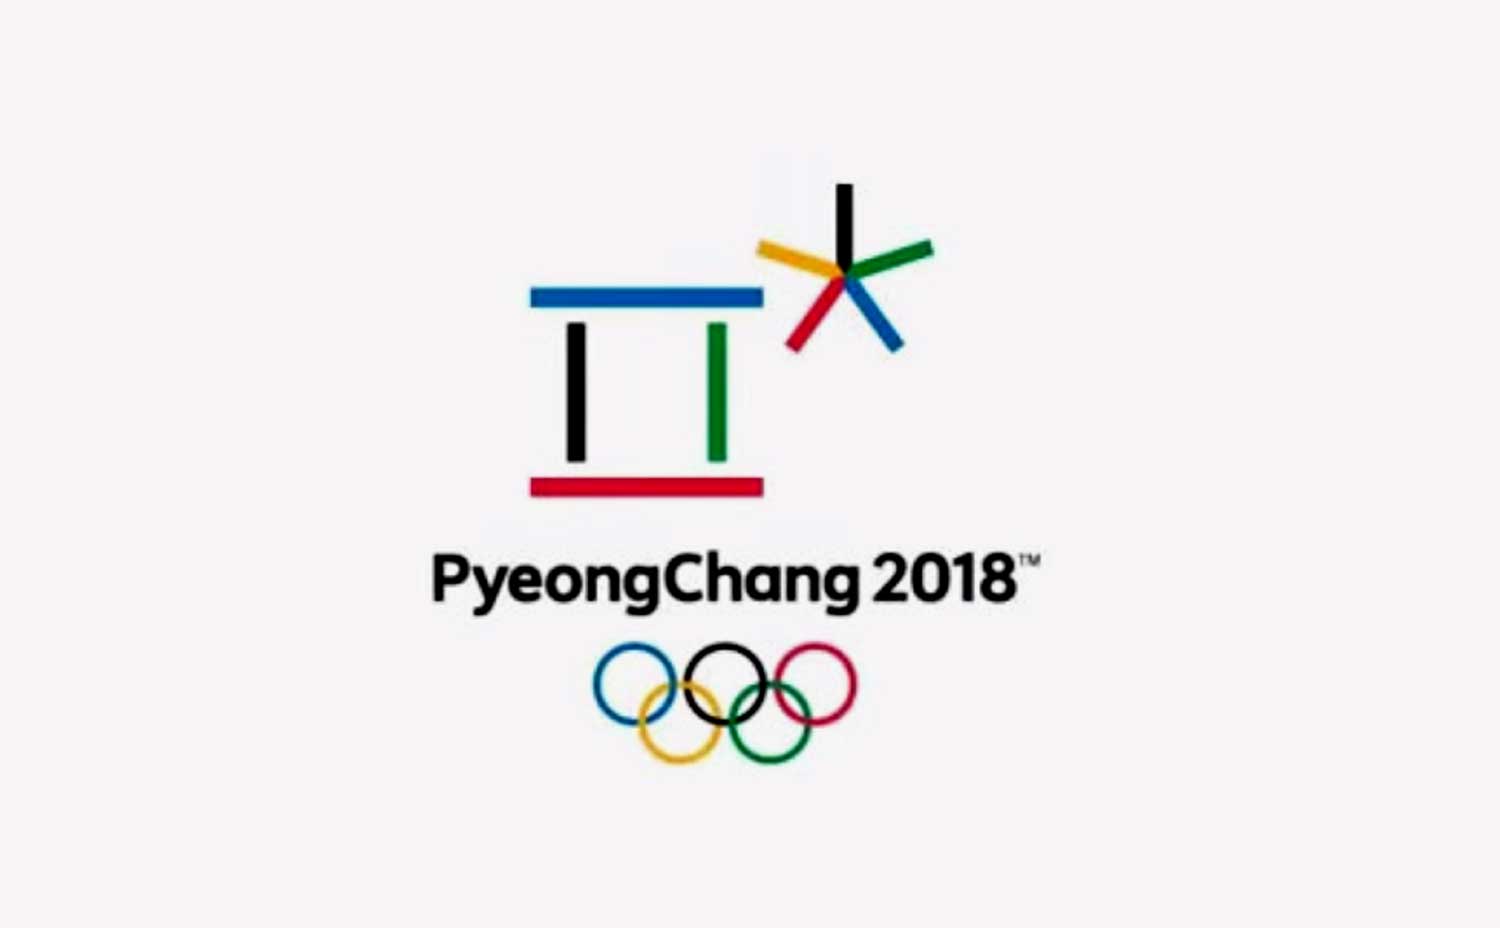 Koning, premier en minister Bruins naar OS in Pyeongchang